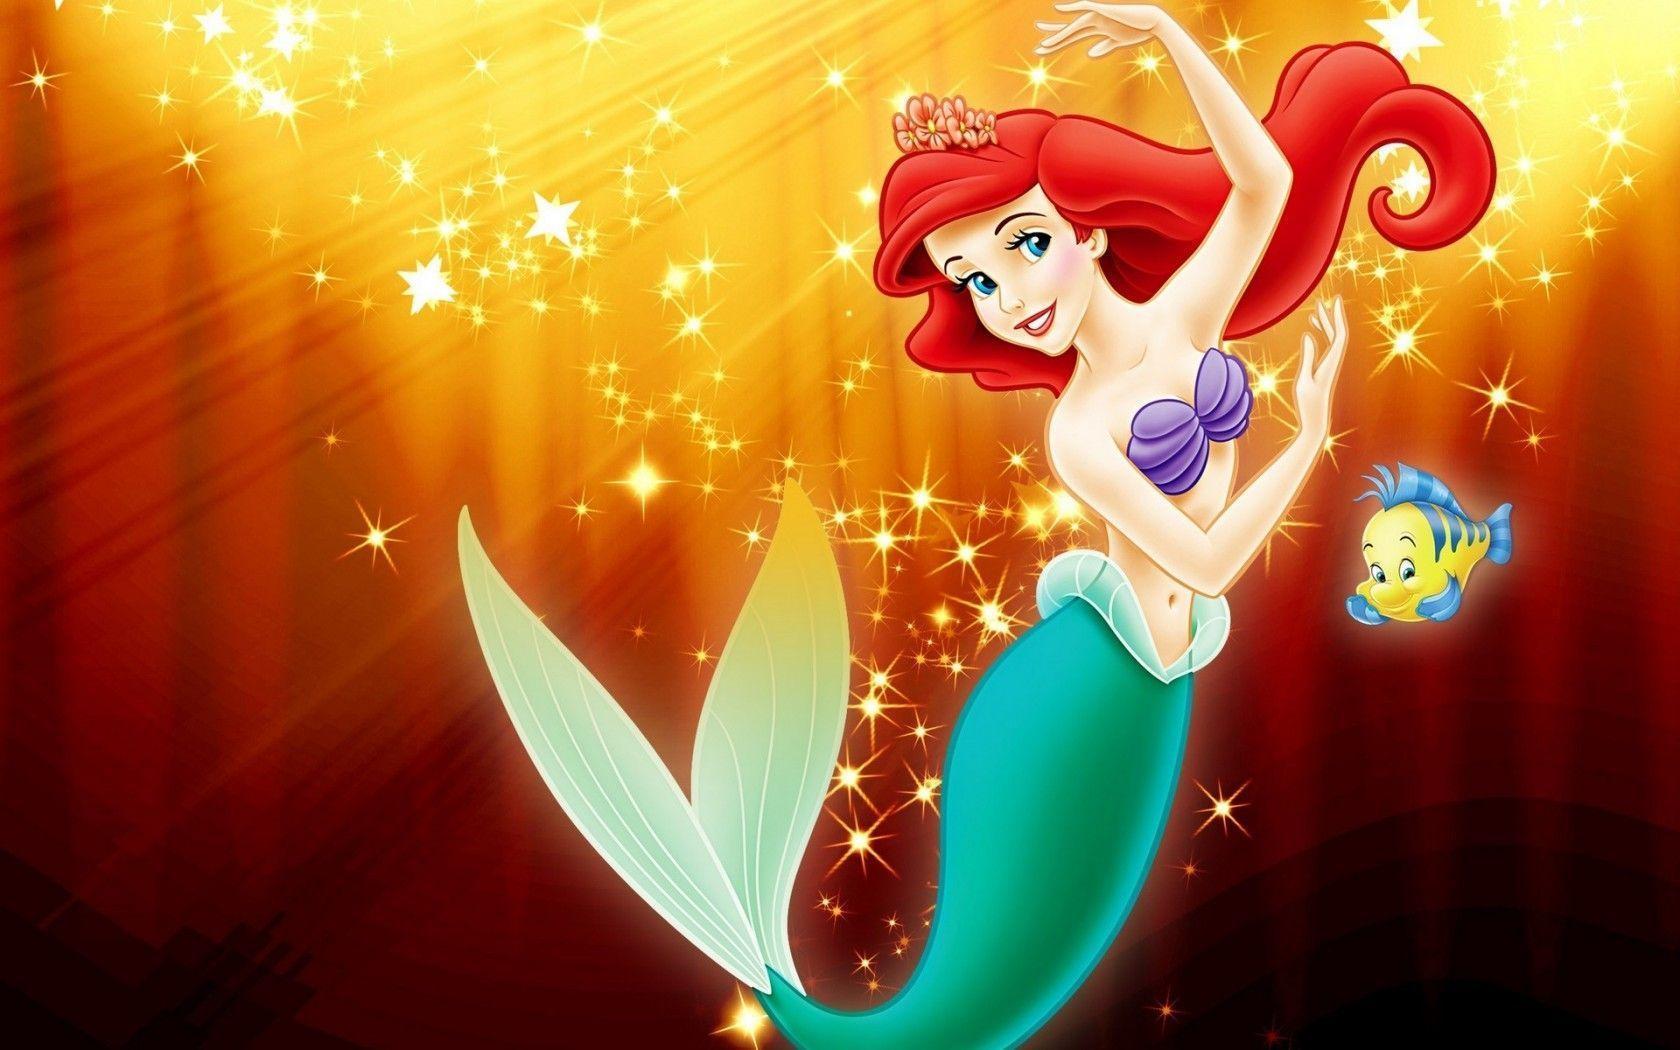 Ariel The Little Mermaid Wallpaper Disney Princess 660x330 Jpg Car